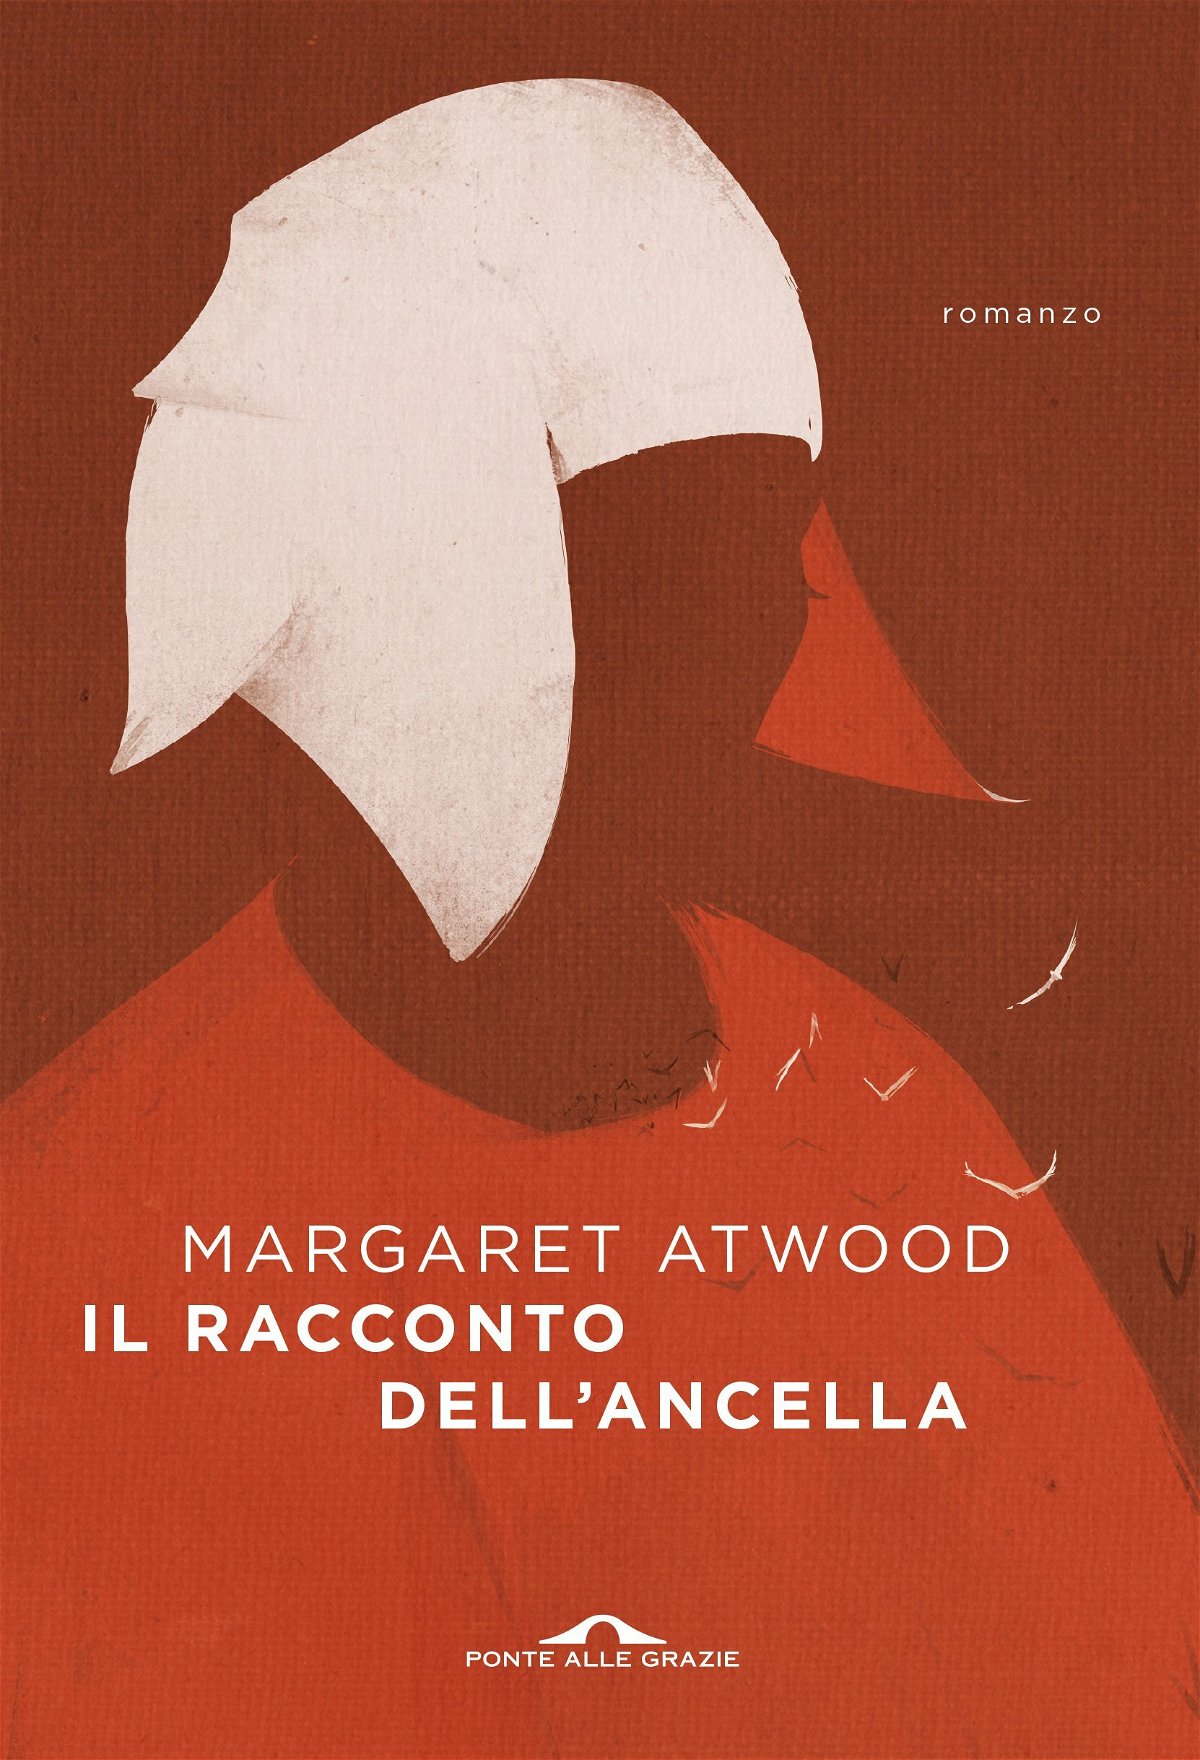 Il romanzo best seller di Margaret Atwood